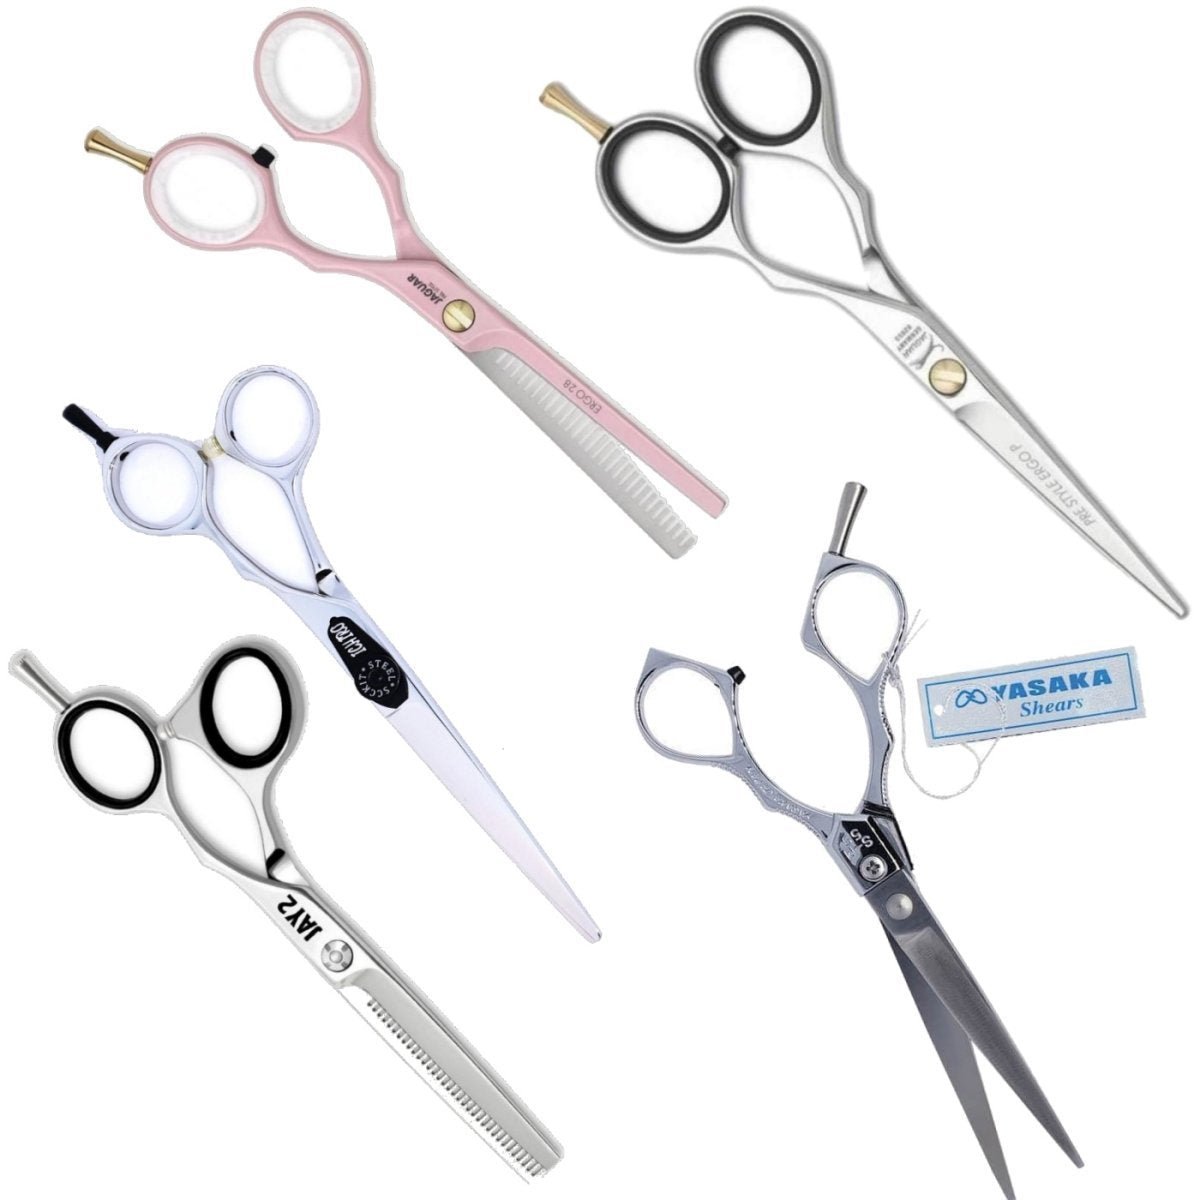 Best Scissors & Shears - Buying Guide